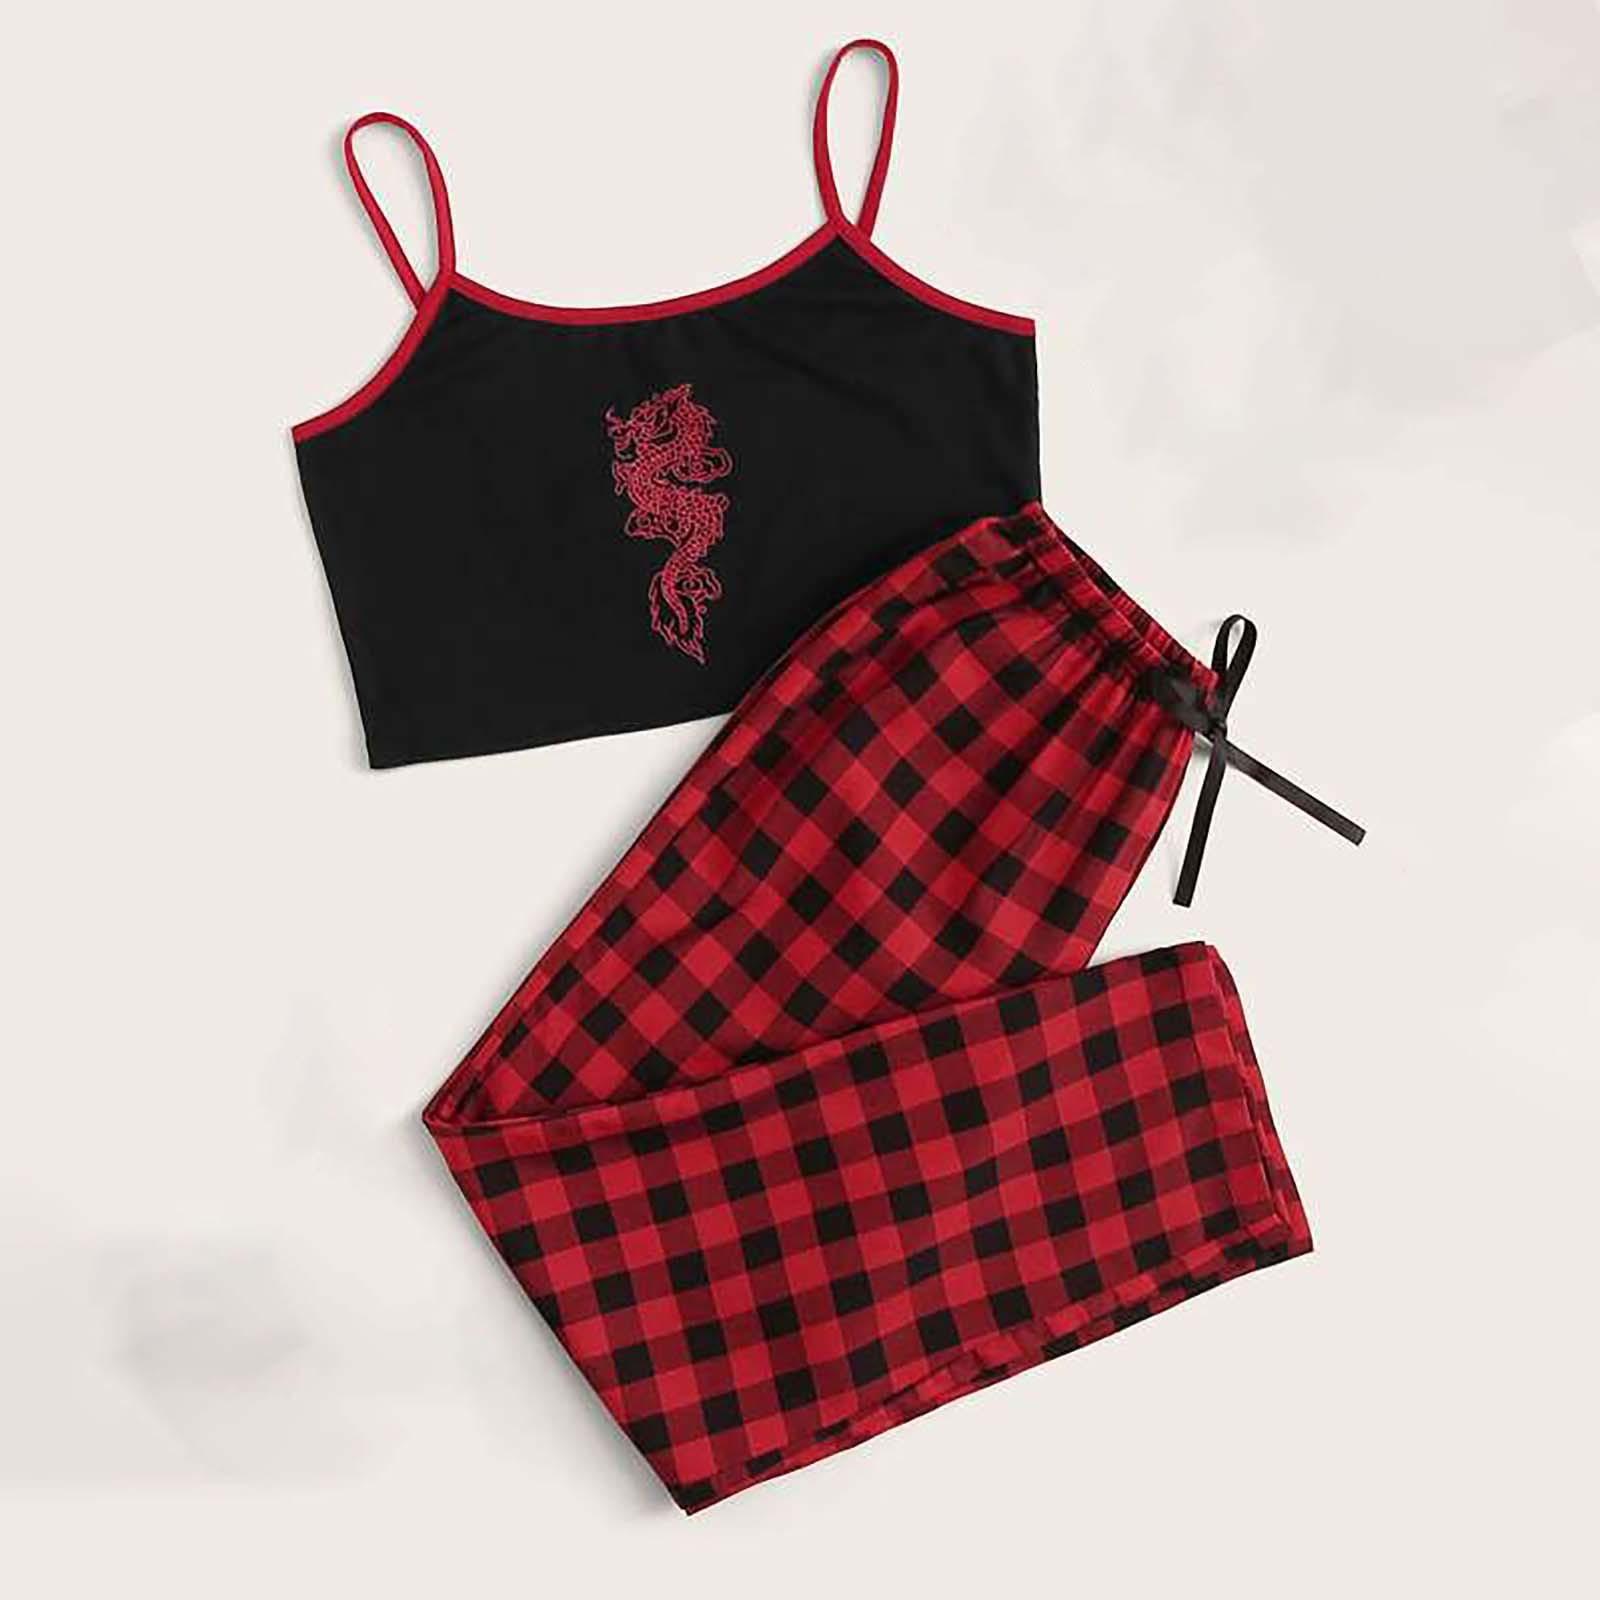 Dear Nana Fashion Sexy Print Sleepwear Lingerie Temptation Babydoll Underwear Nightdress